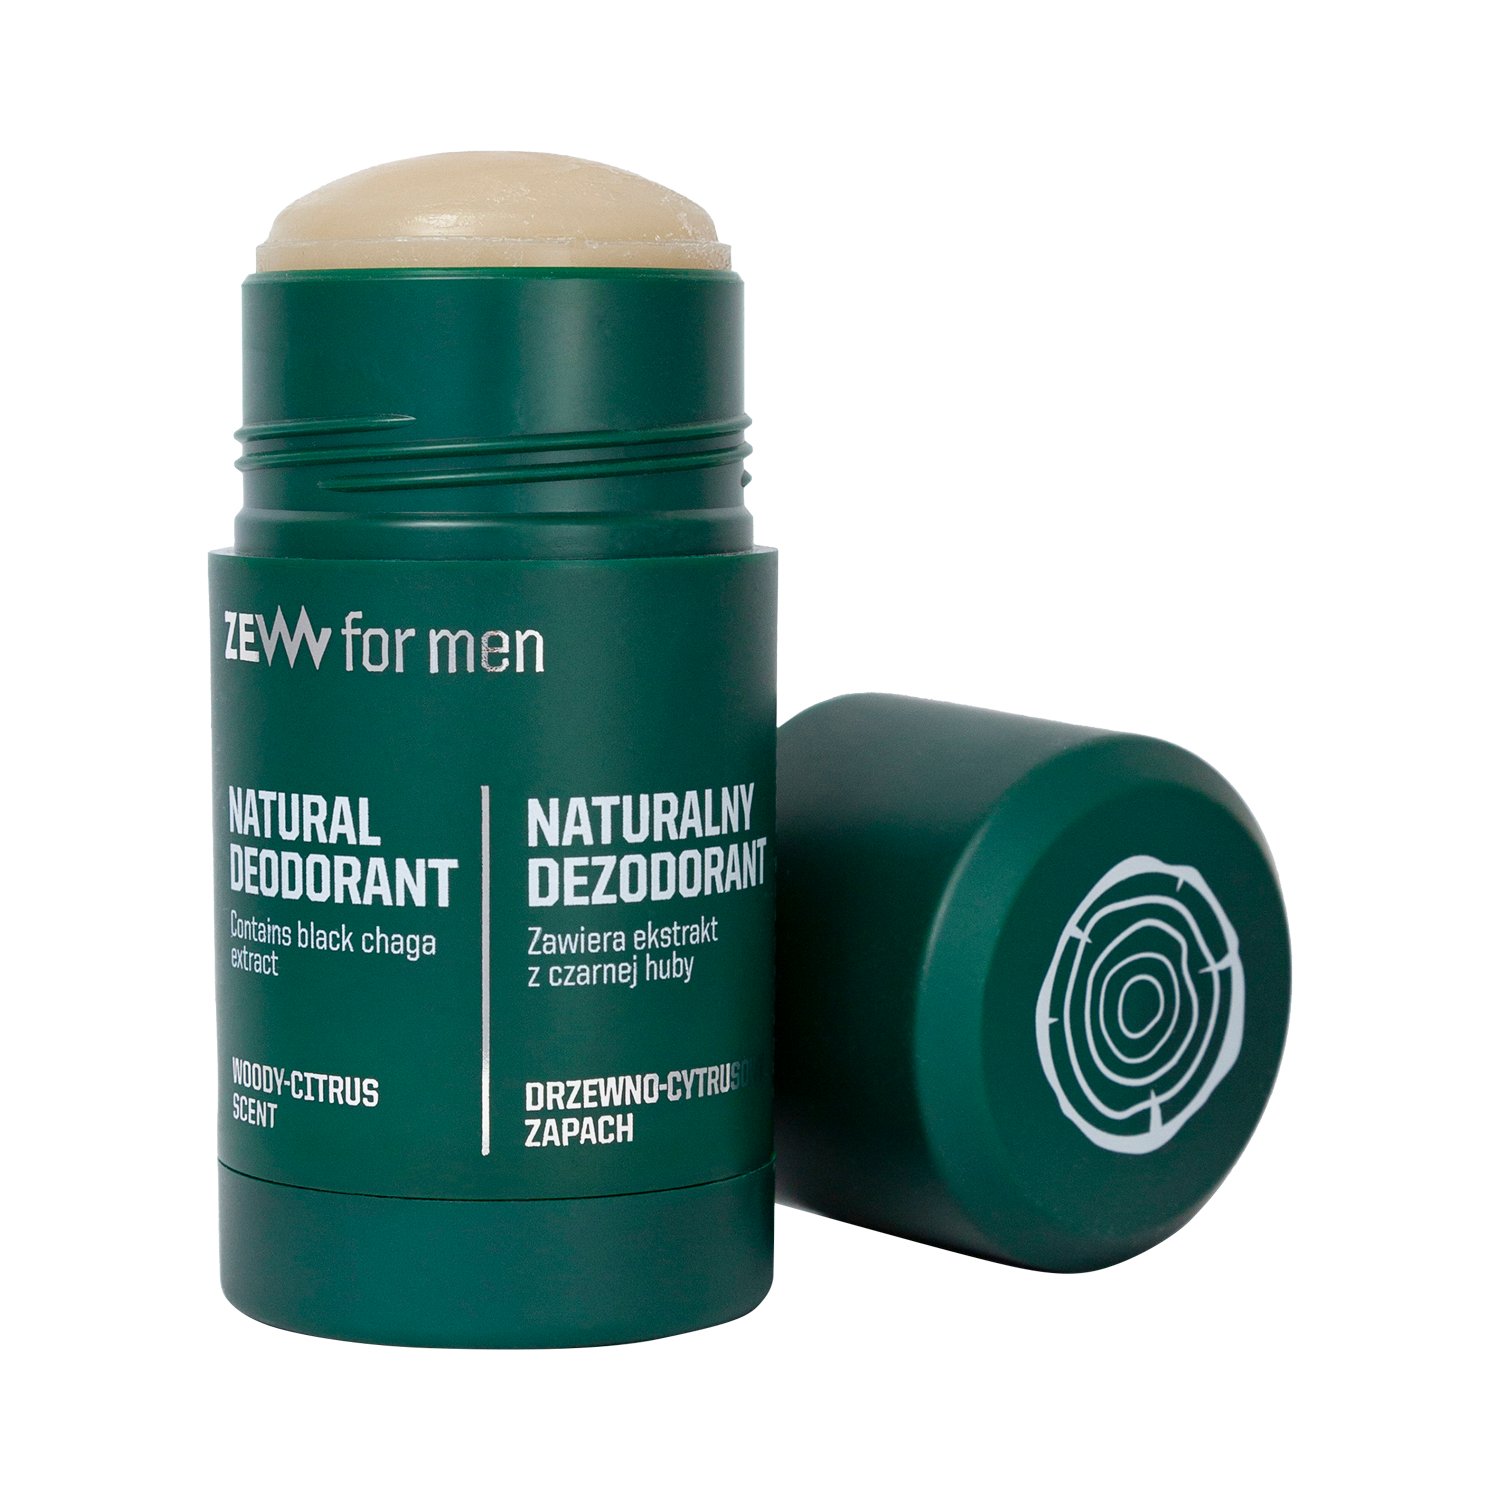 ZEW for men - Natural Deodorant - Deo Stick